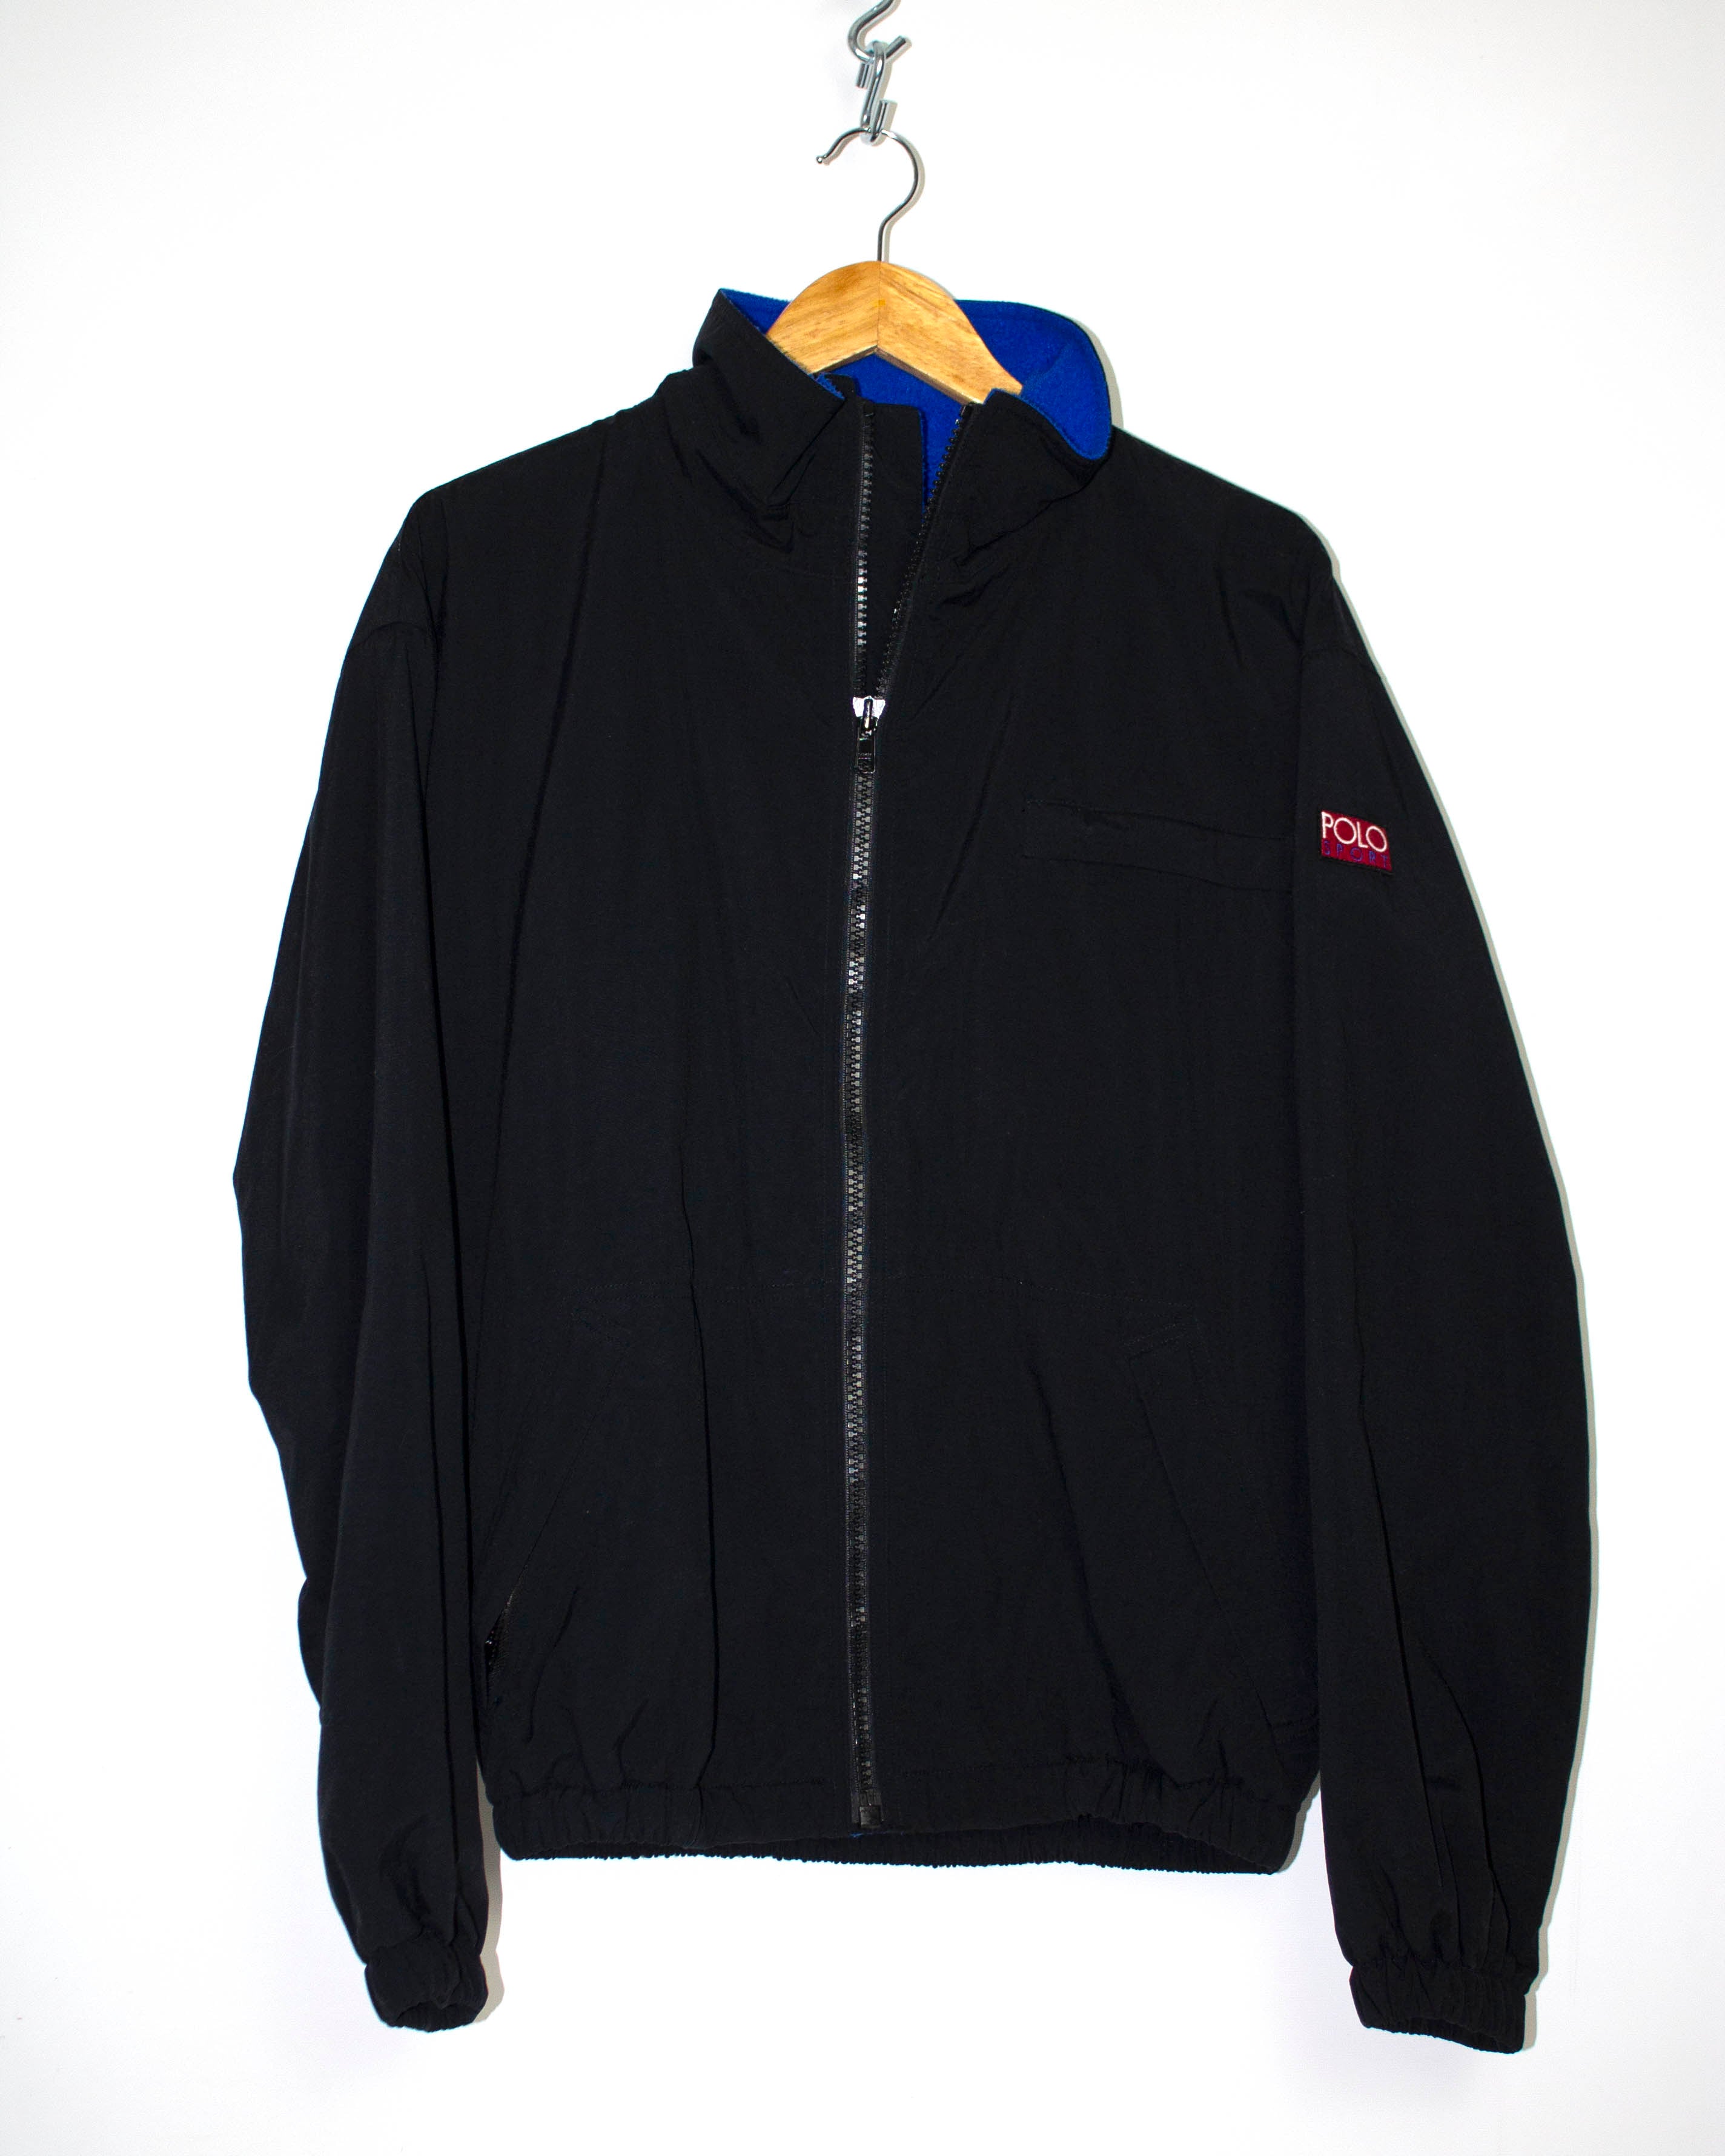 Vintage Ralph Lauren Polo Sport Fleece Lined Jacket Sz M